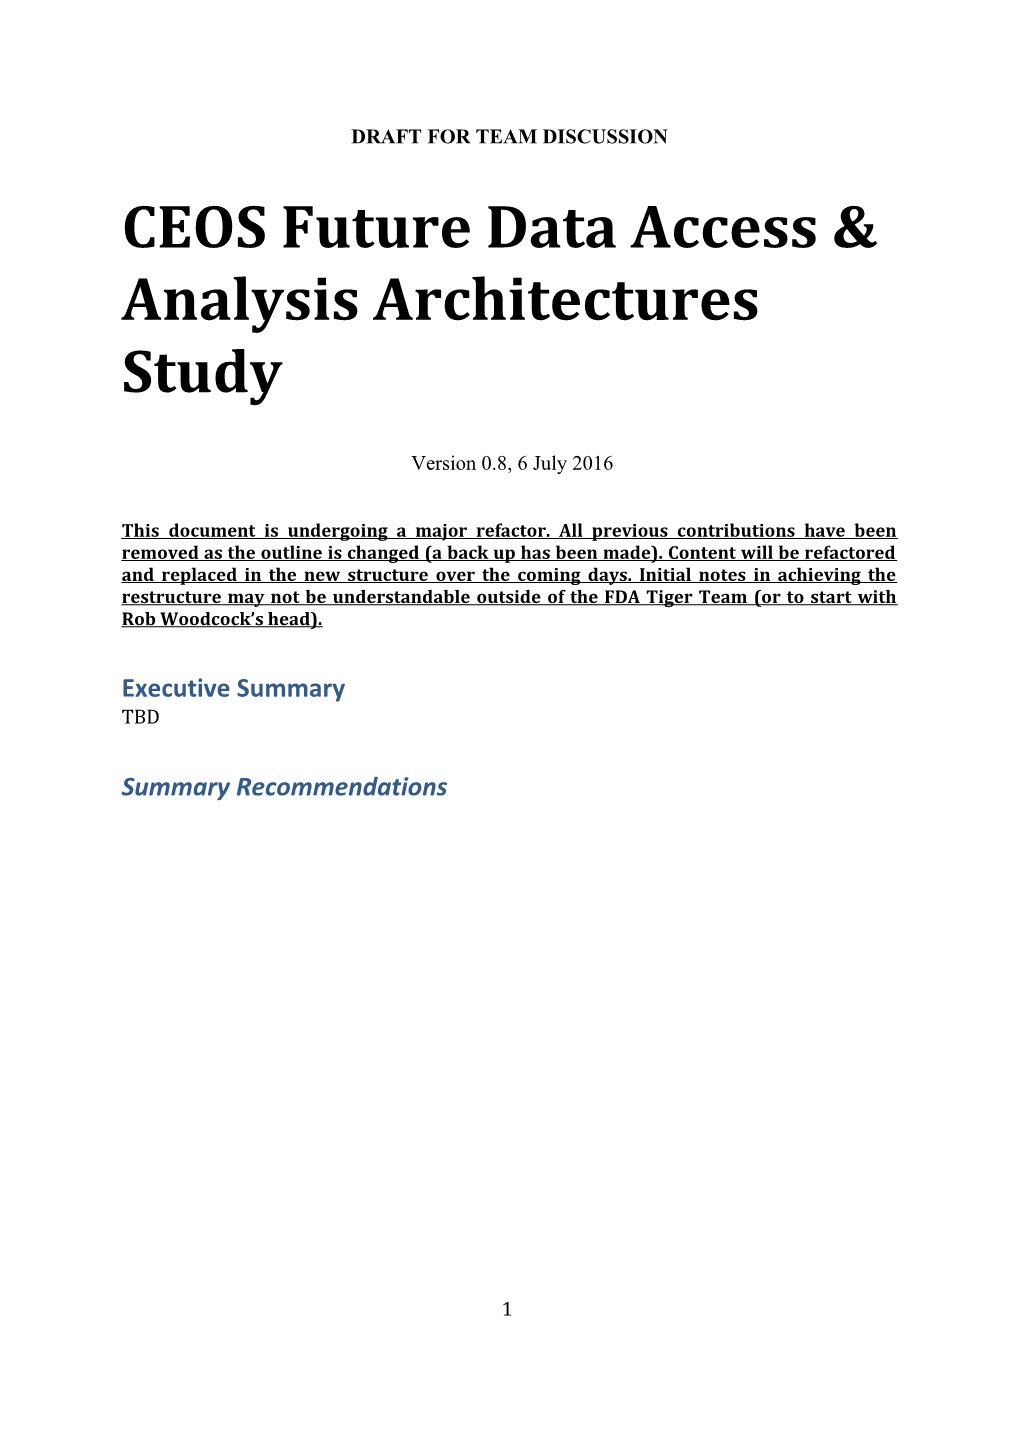 CEOS Future Data Access & Analysis Architectures Study